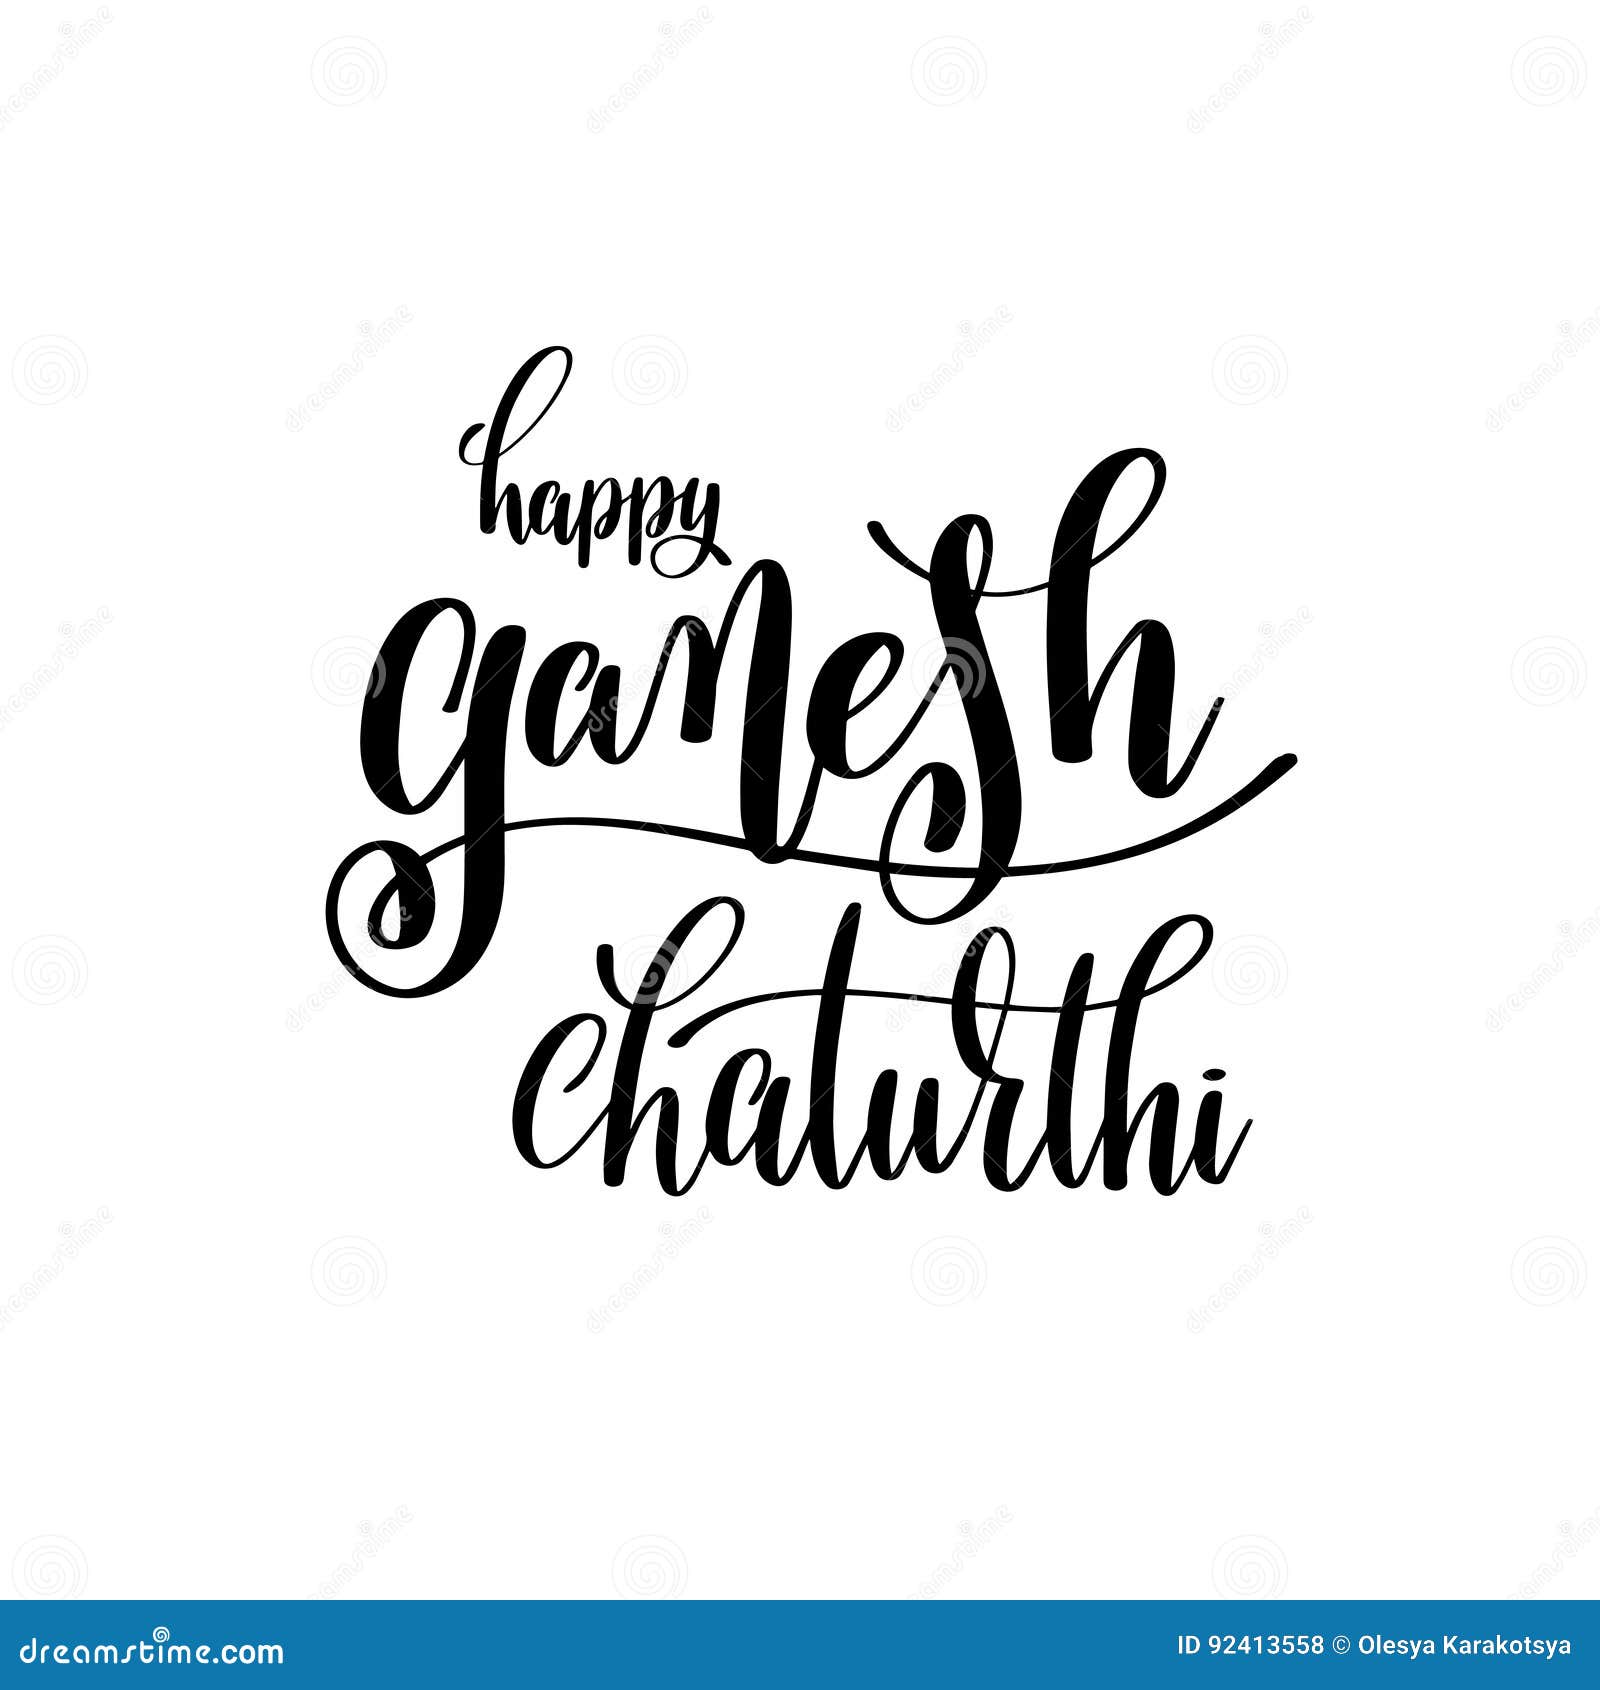 Happy Ganesh Chaturthi Hand Lettering Stock Vector - Illustration of ...